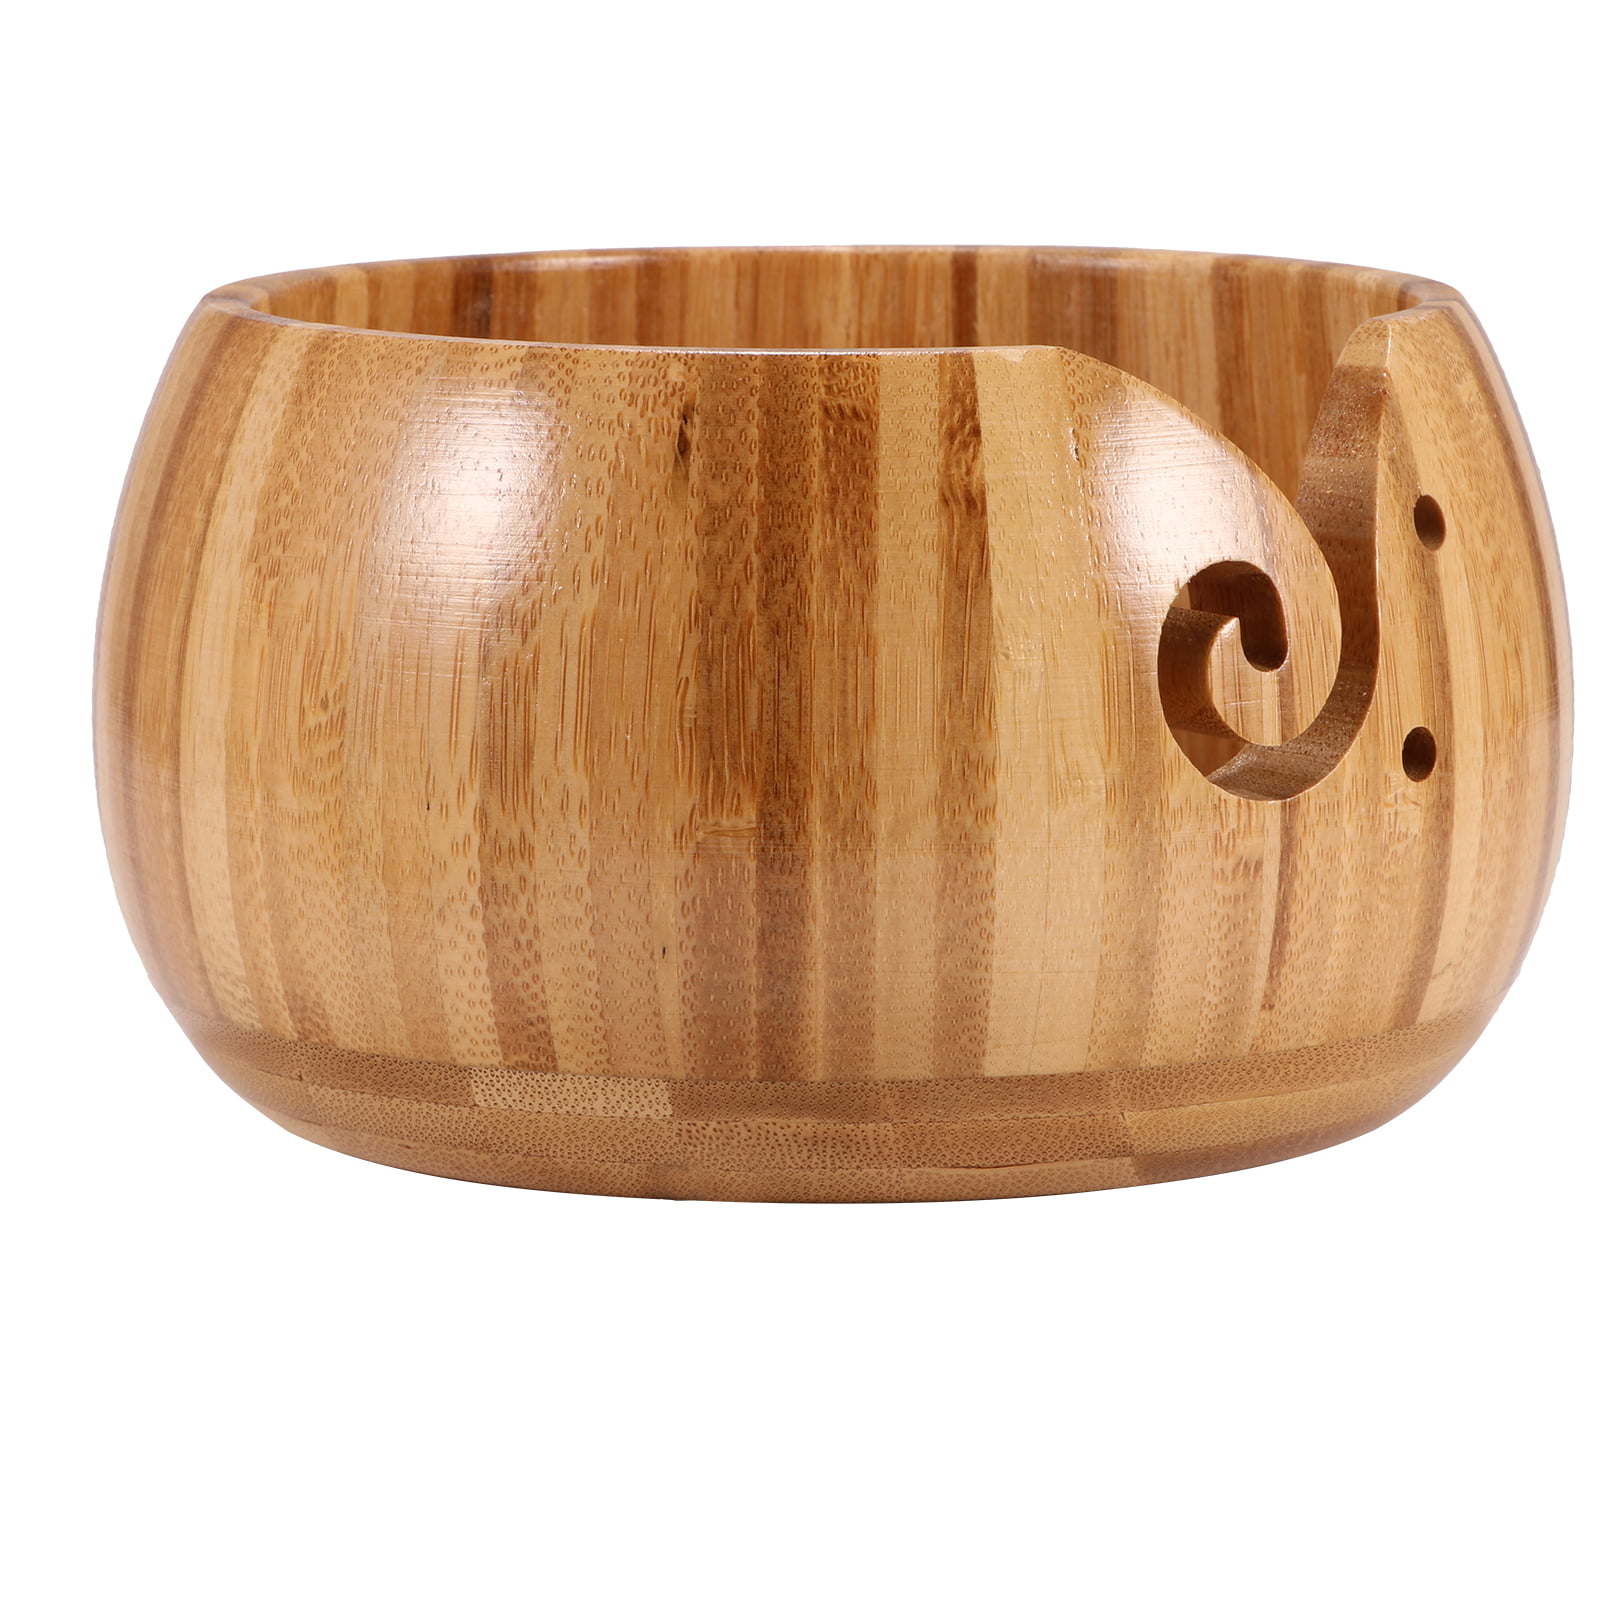 Details about   handmade wooden lidded bowl